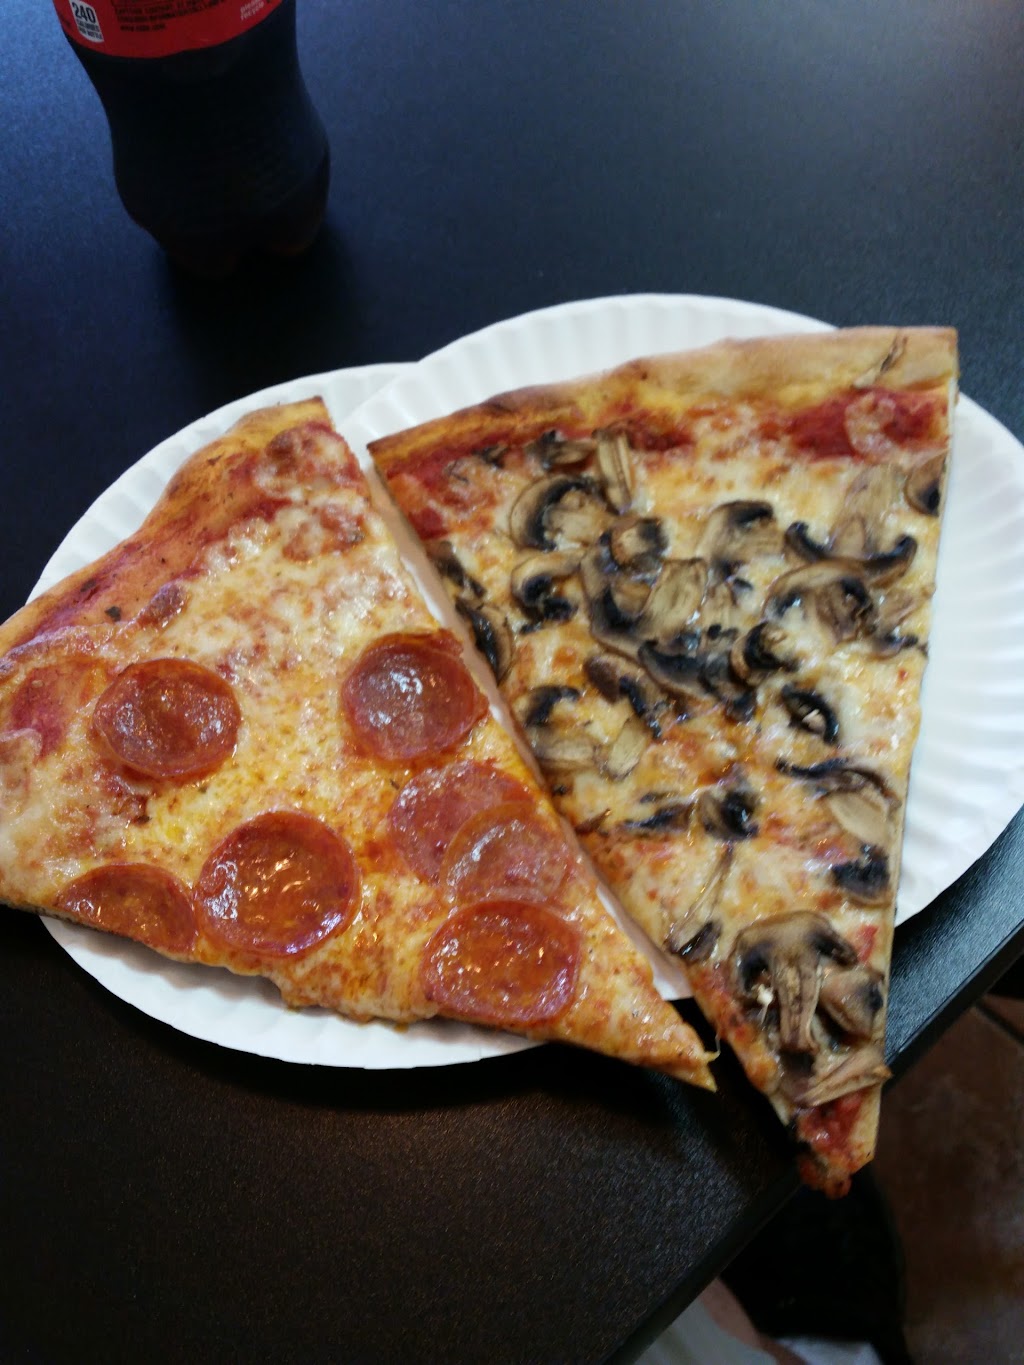 Bennys Pizza & Restaurant | 103 NJ-71, Spring Lake, NJ 07762 | Phone: (732) 359-7611